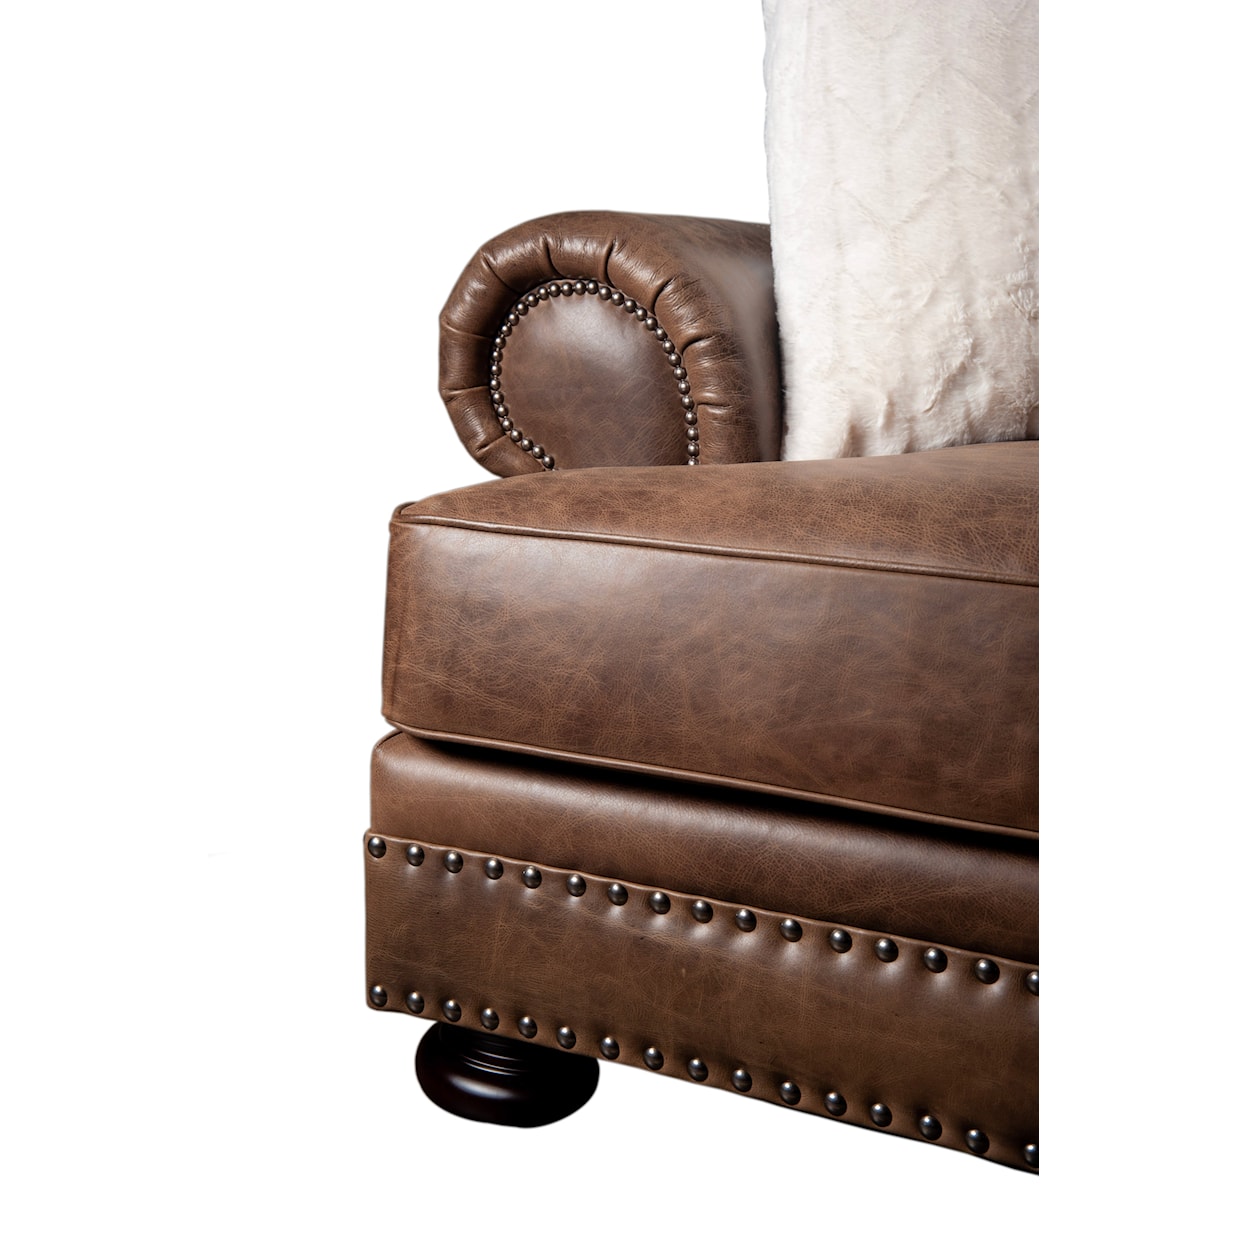 Bernhardt Foster  Foster Leather Sofa